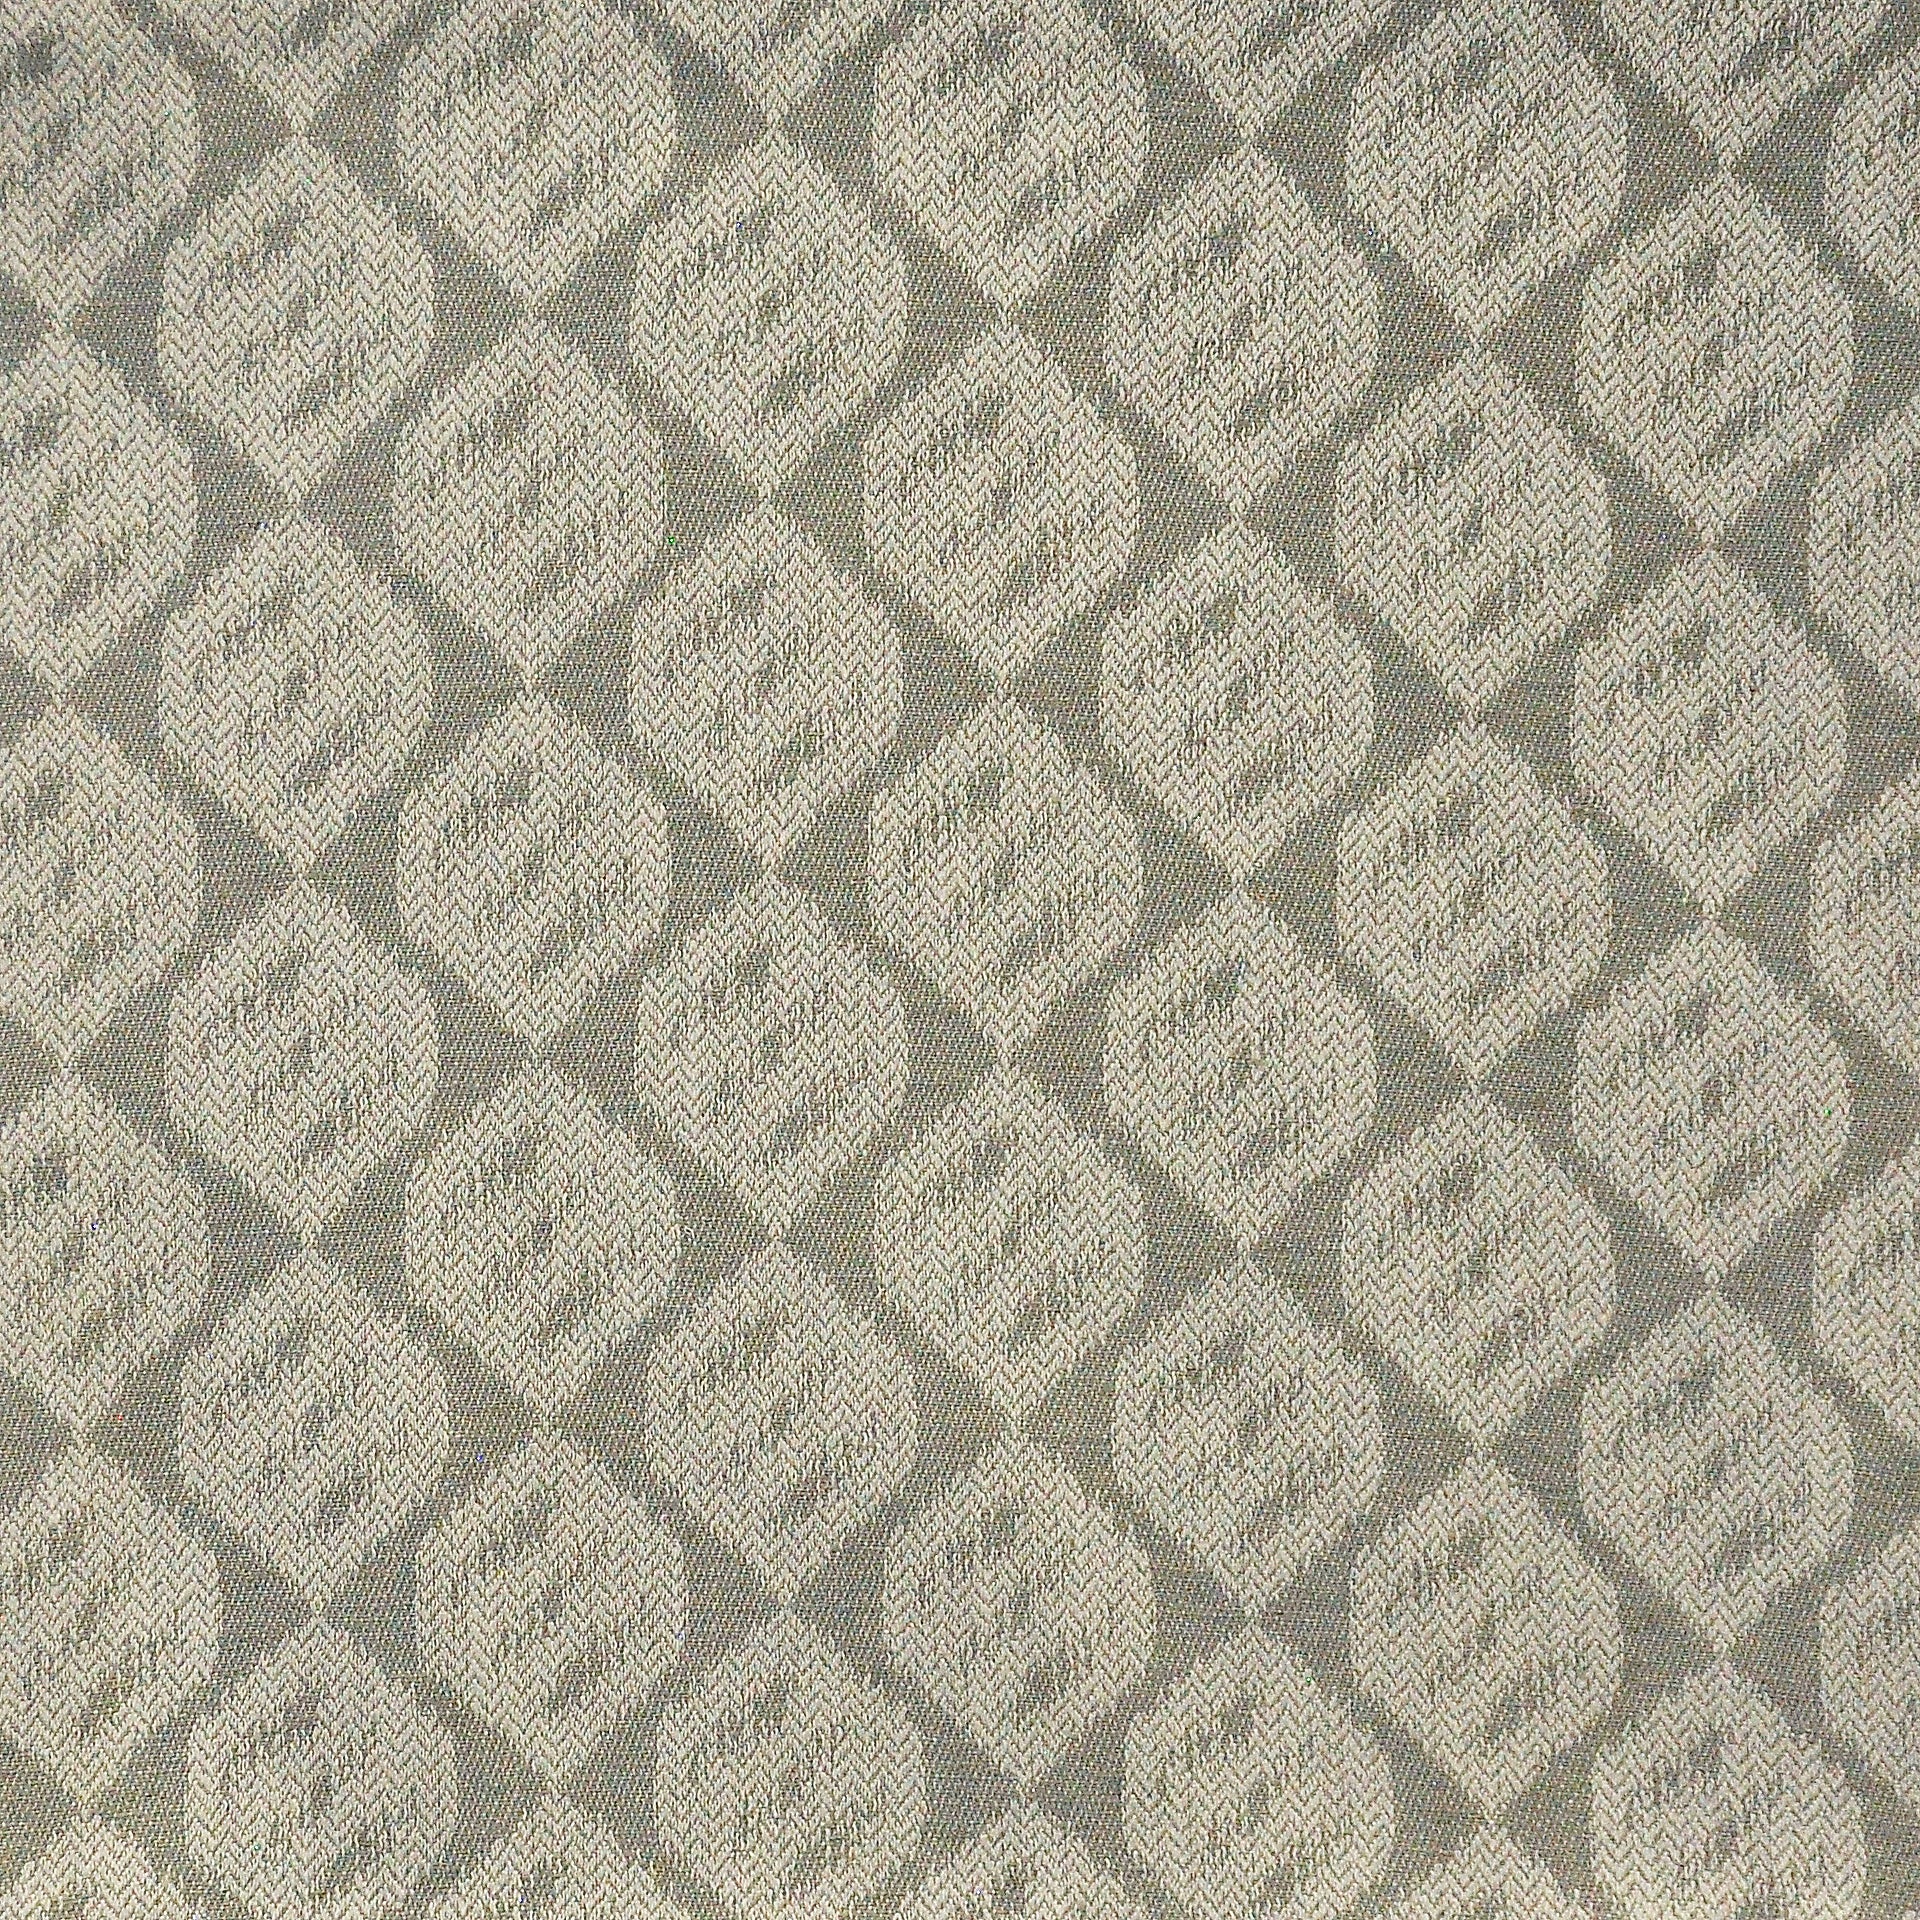 Purchase Maxwell Fabric - Cyma, # 636 Aluminum